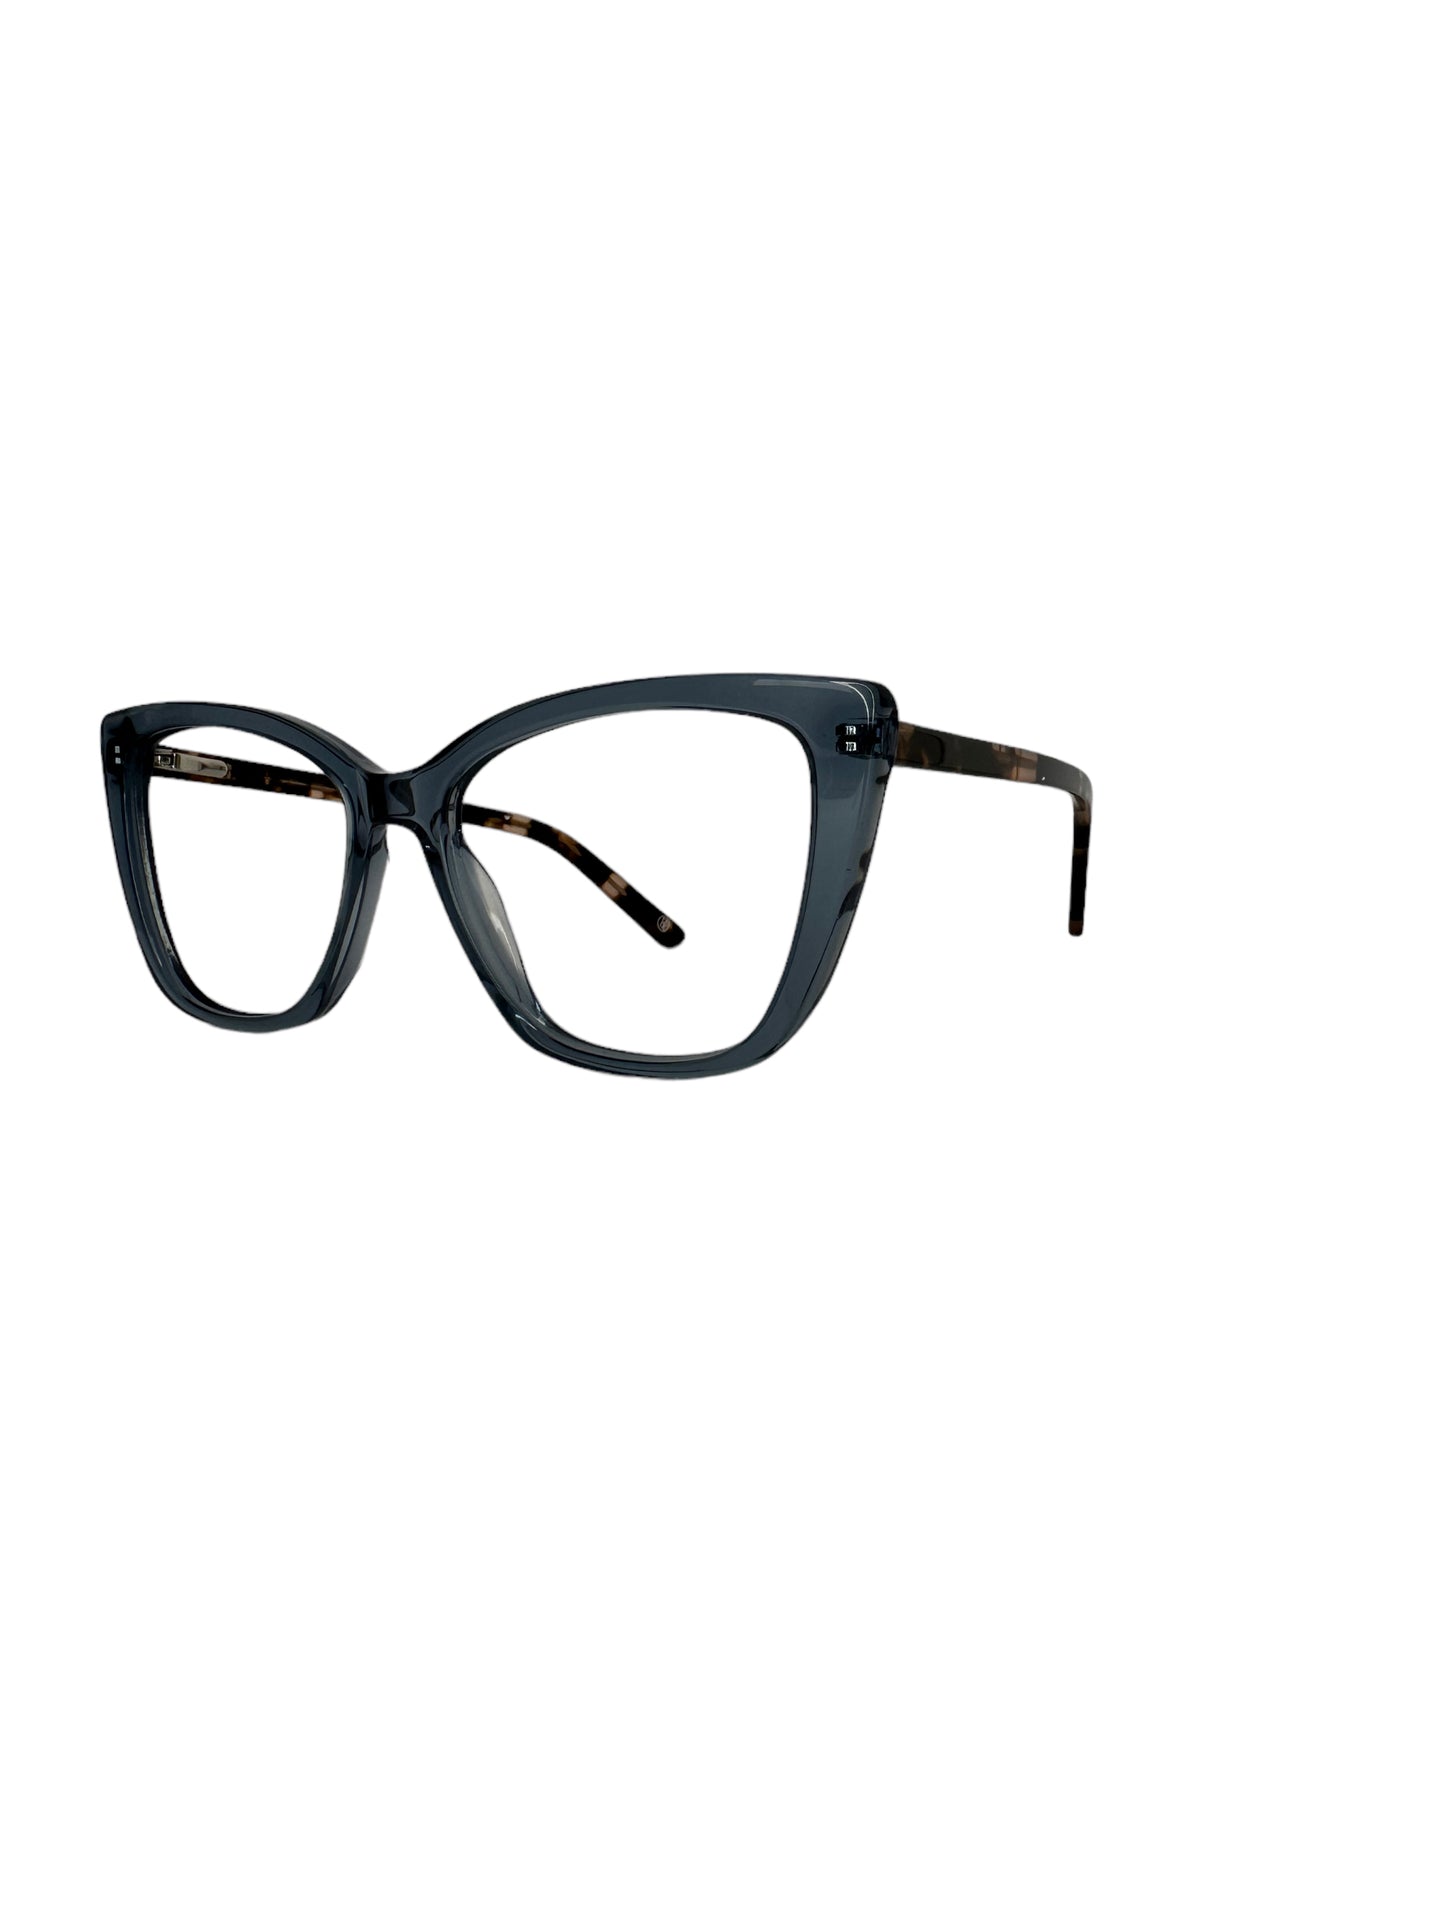 Óculos Feminino Acetado Azul Transparente Haste Mesclado SULQ3040  C10  55